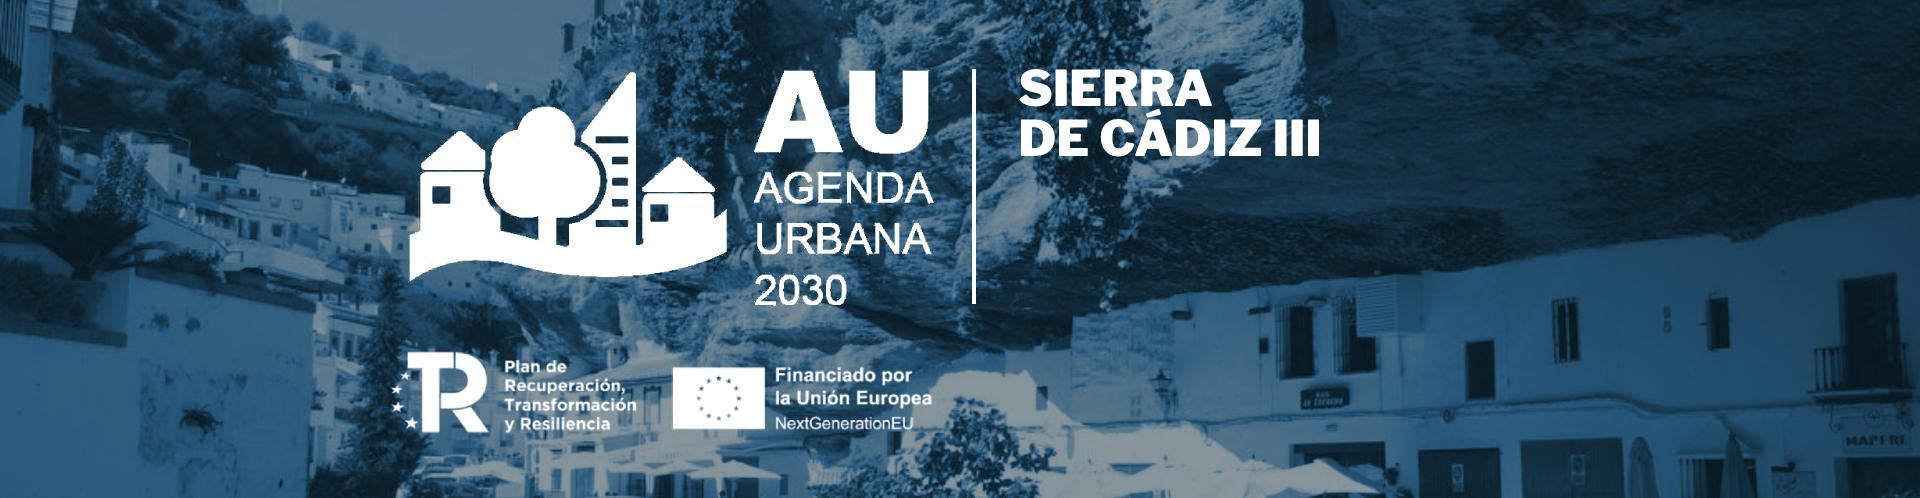 Agenda Urbana 2030 Sierra de Cádiz III